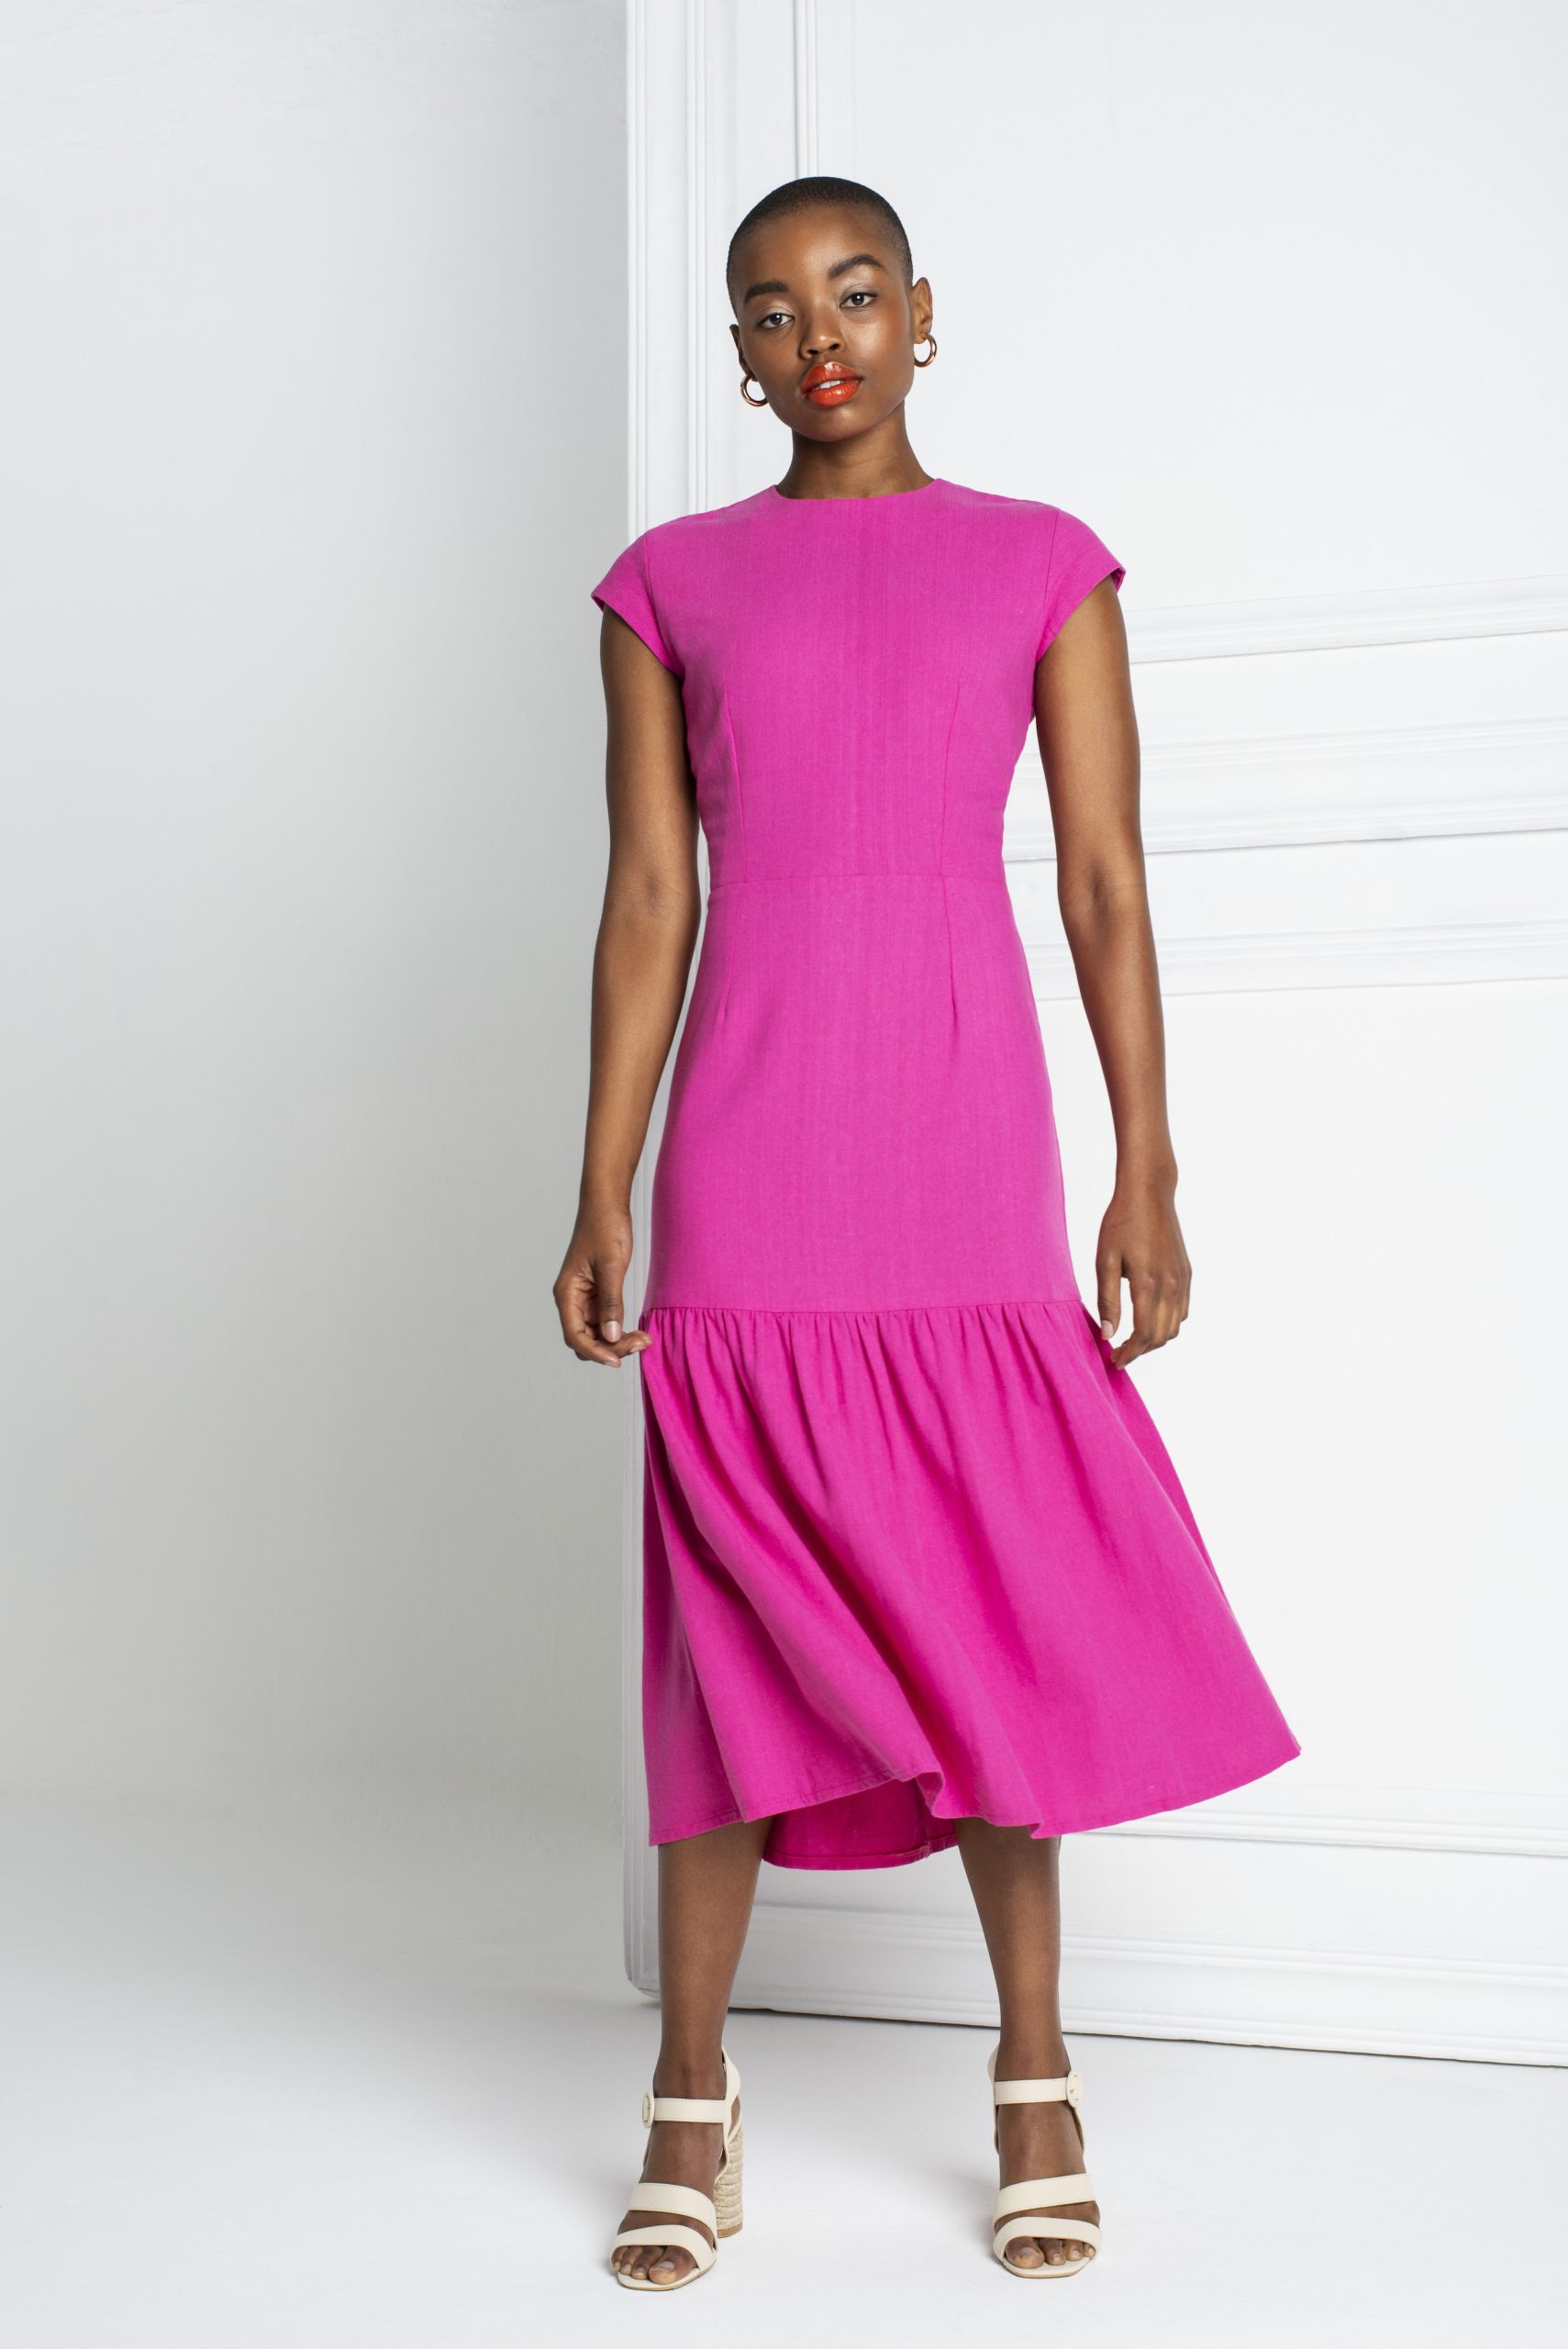 Pattern Sewciety Sari Sheath Dress - The Fold Line